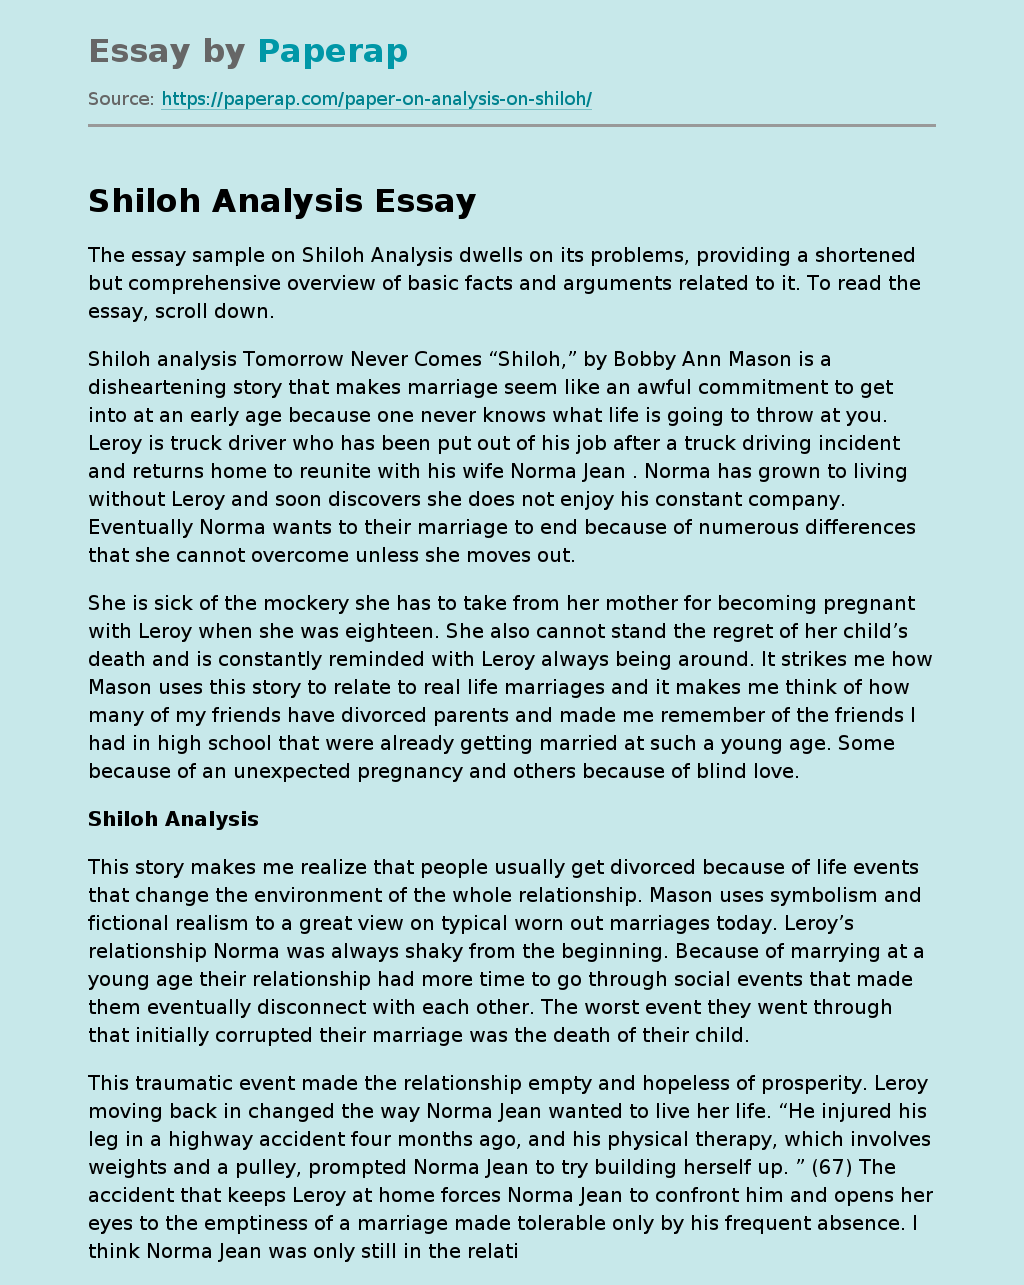 Shiloh Analysis